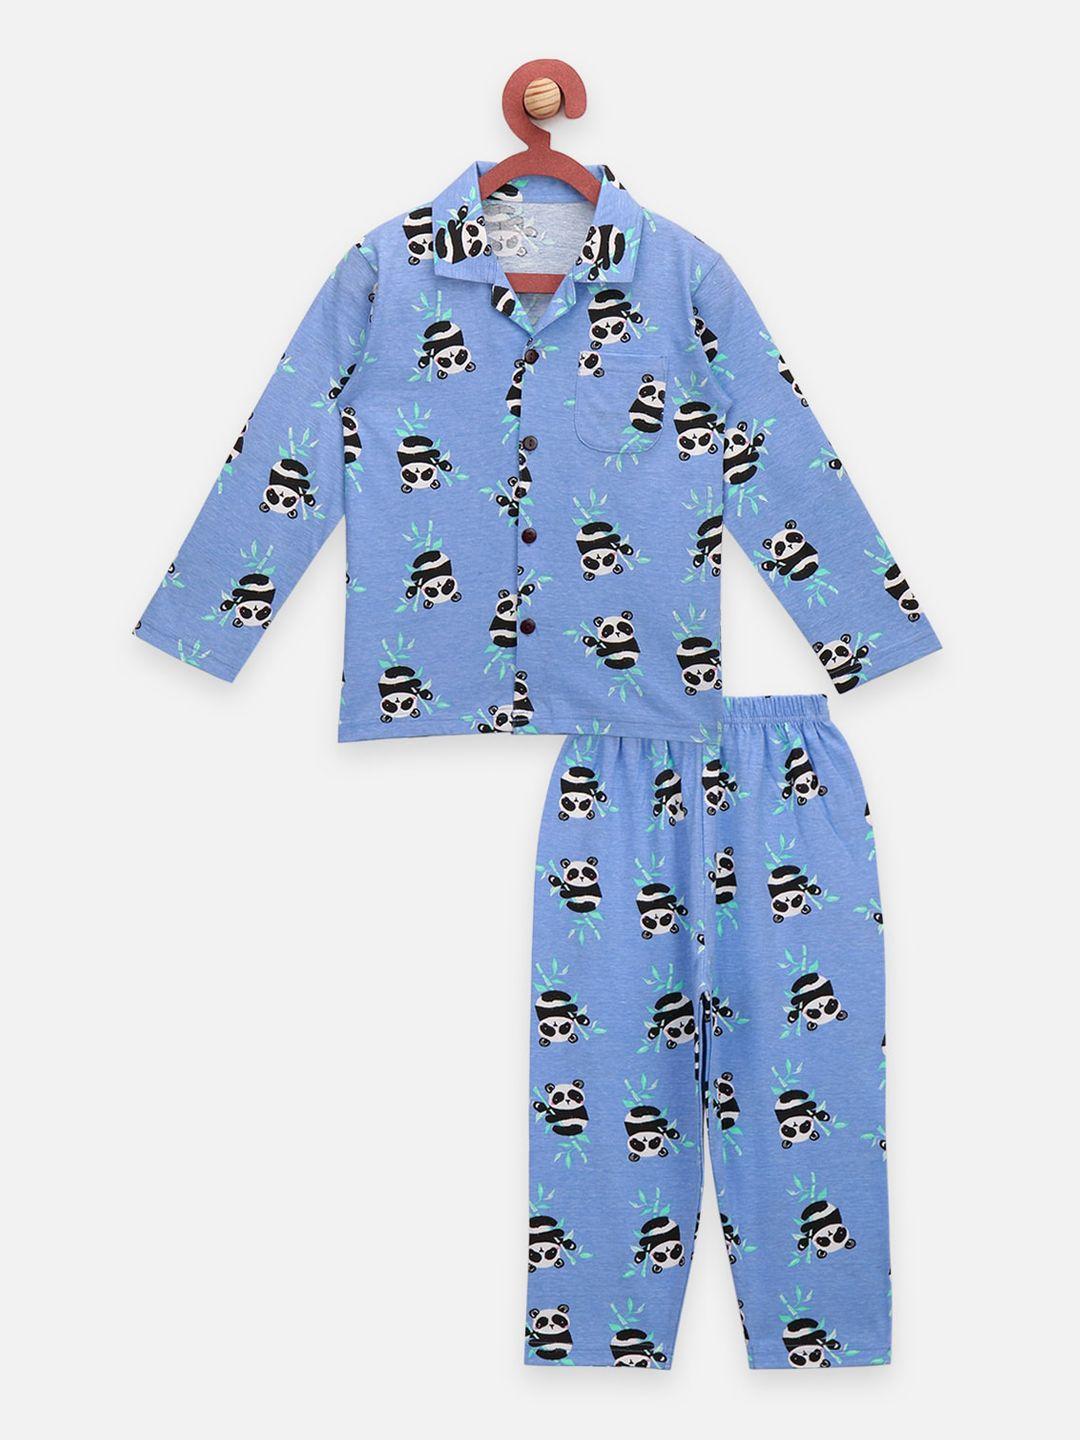 lilpicks boys blue panda printed nightsuit